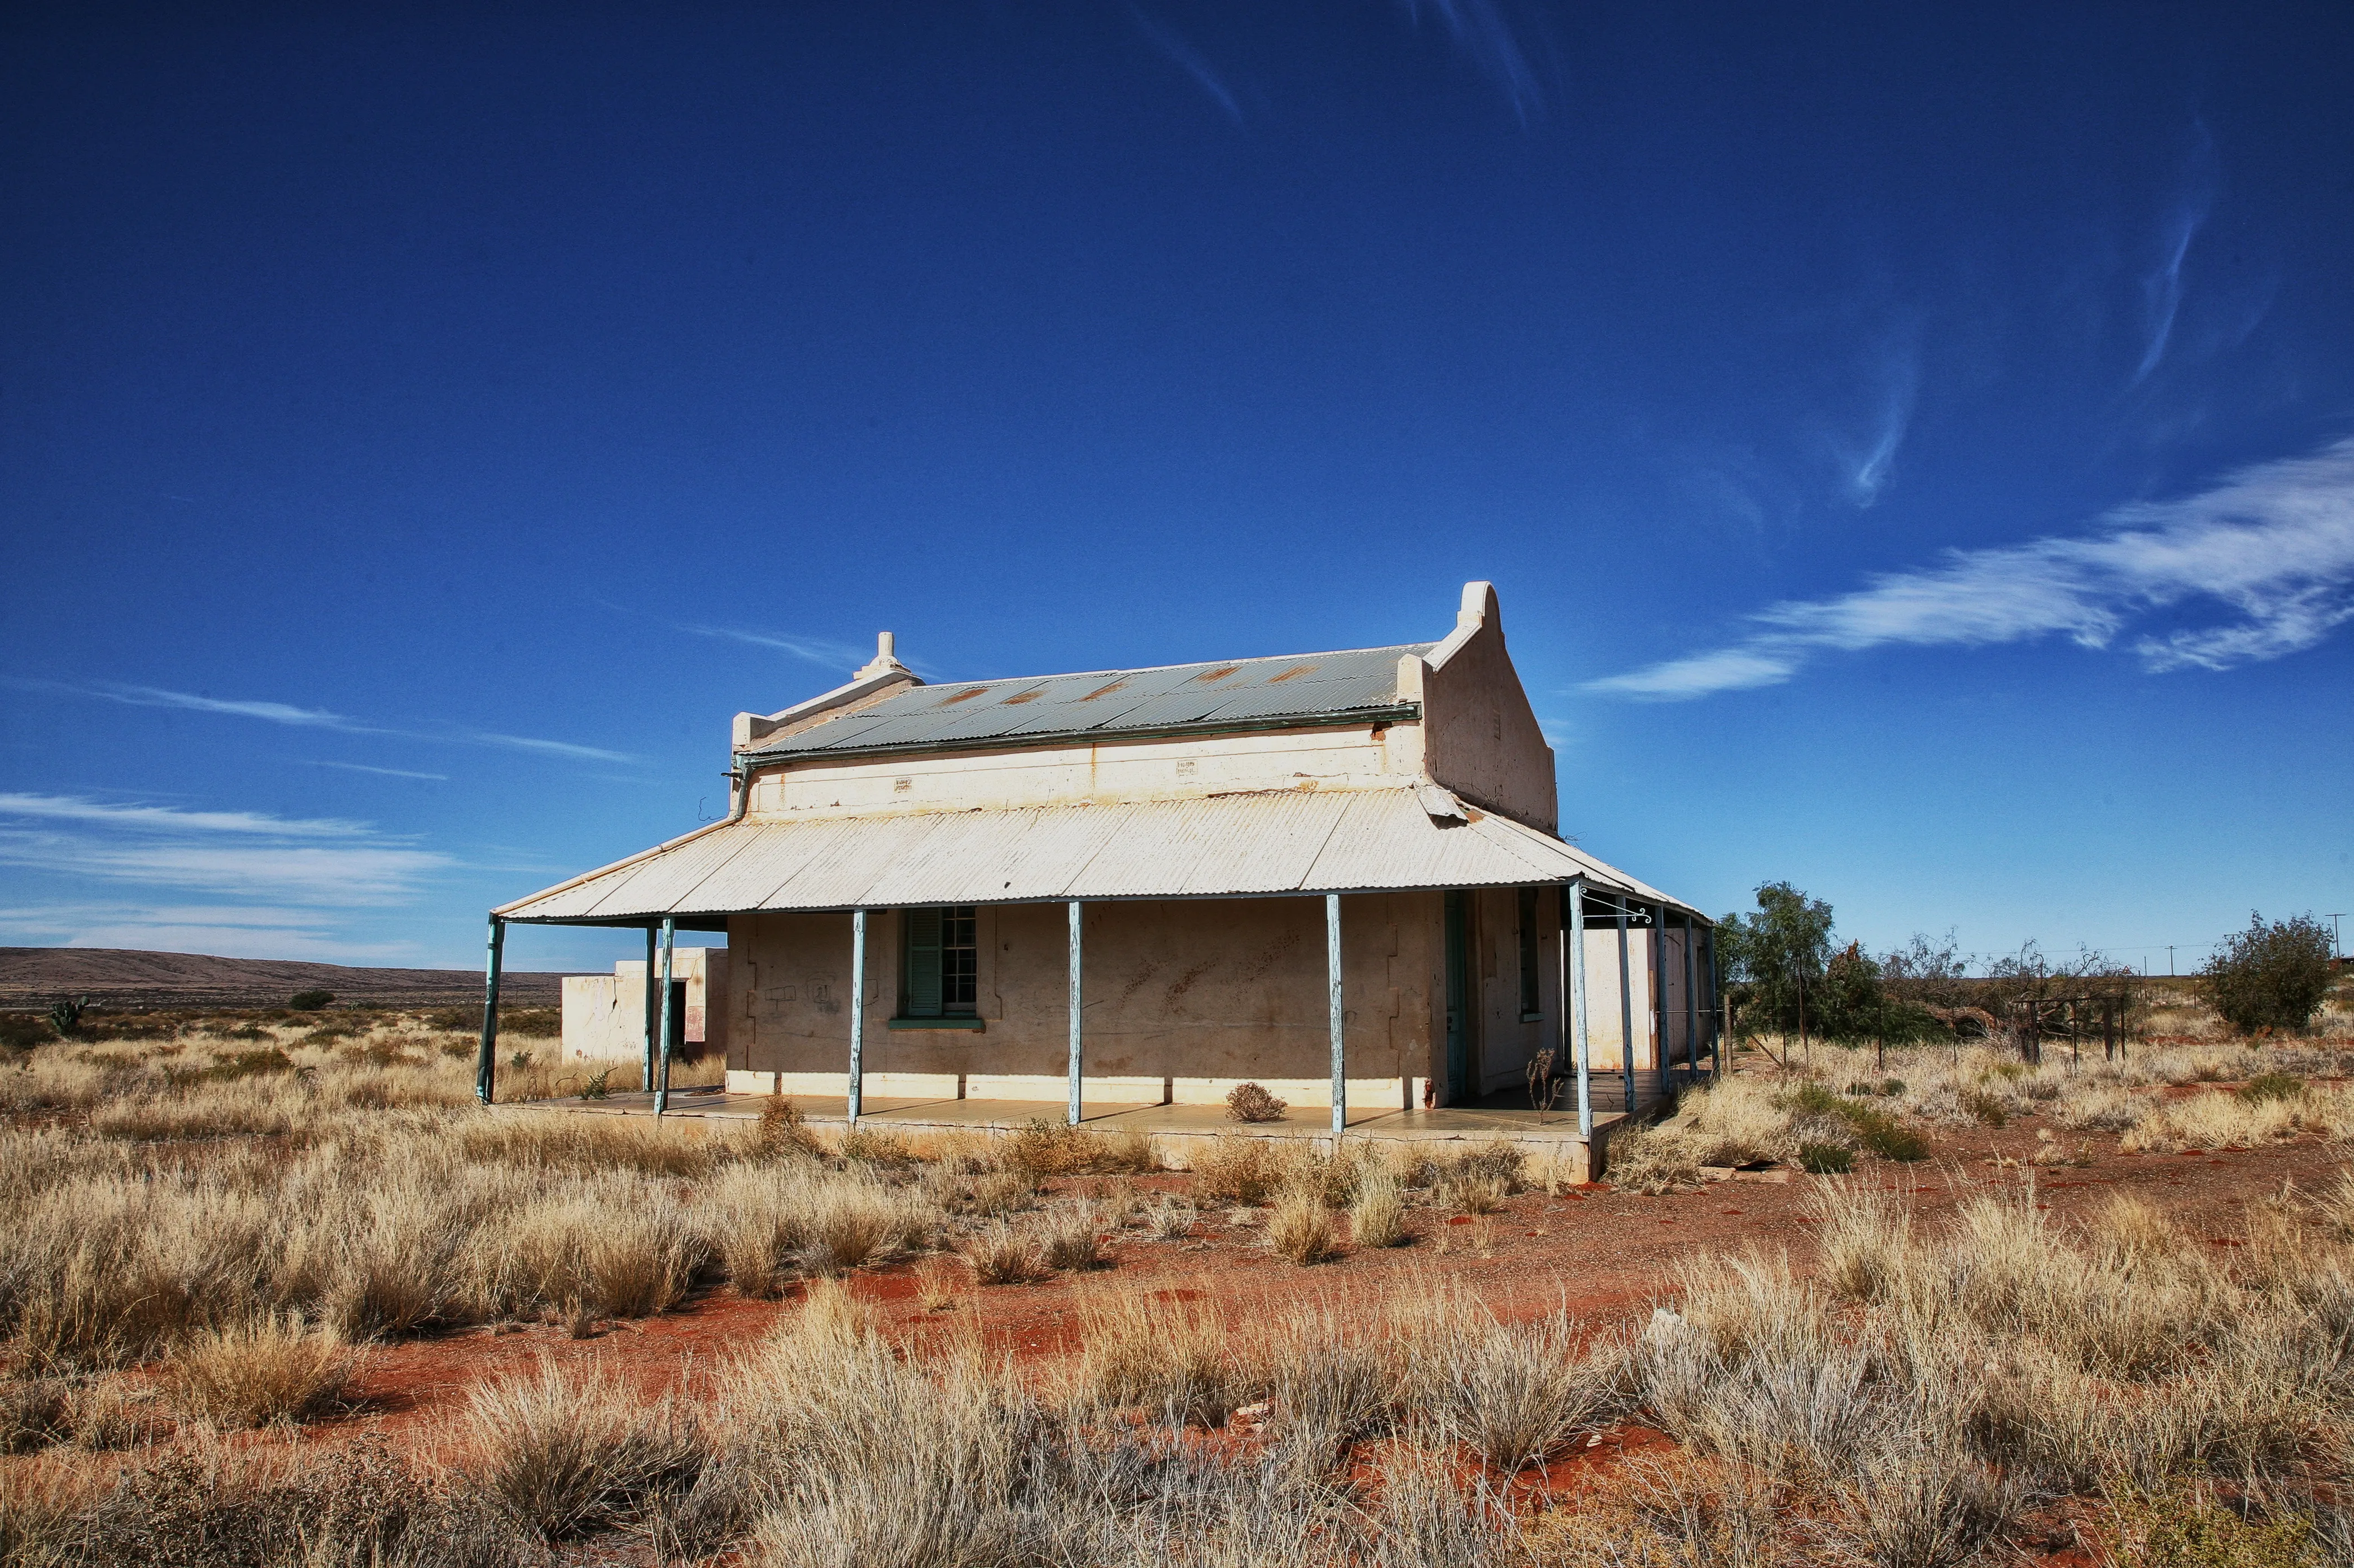 Ranch house-style Kalahari stoep houses for cool summer breezes in Putsonderwater.